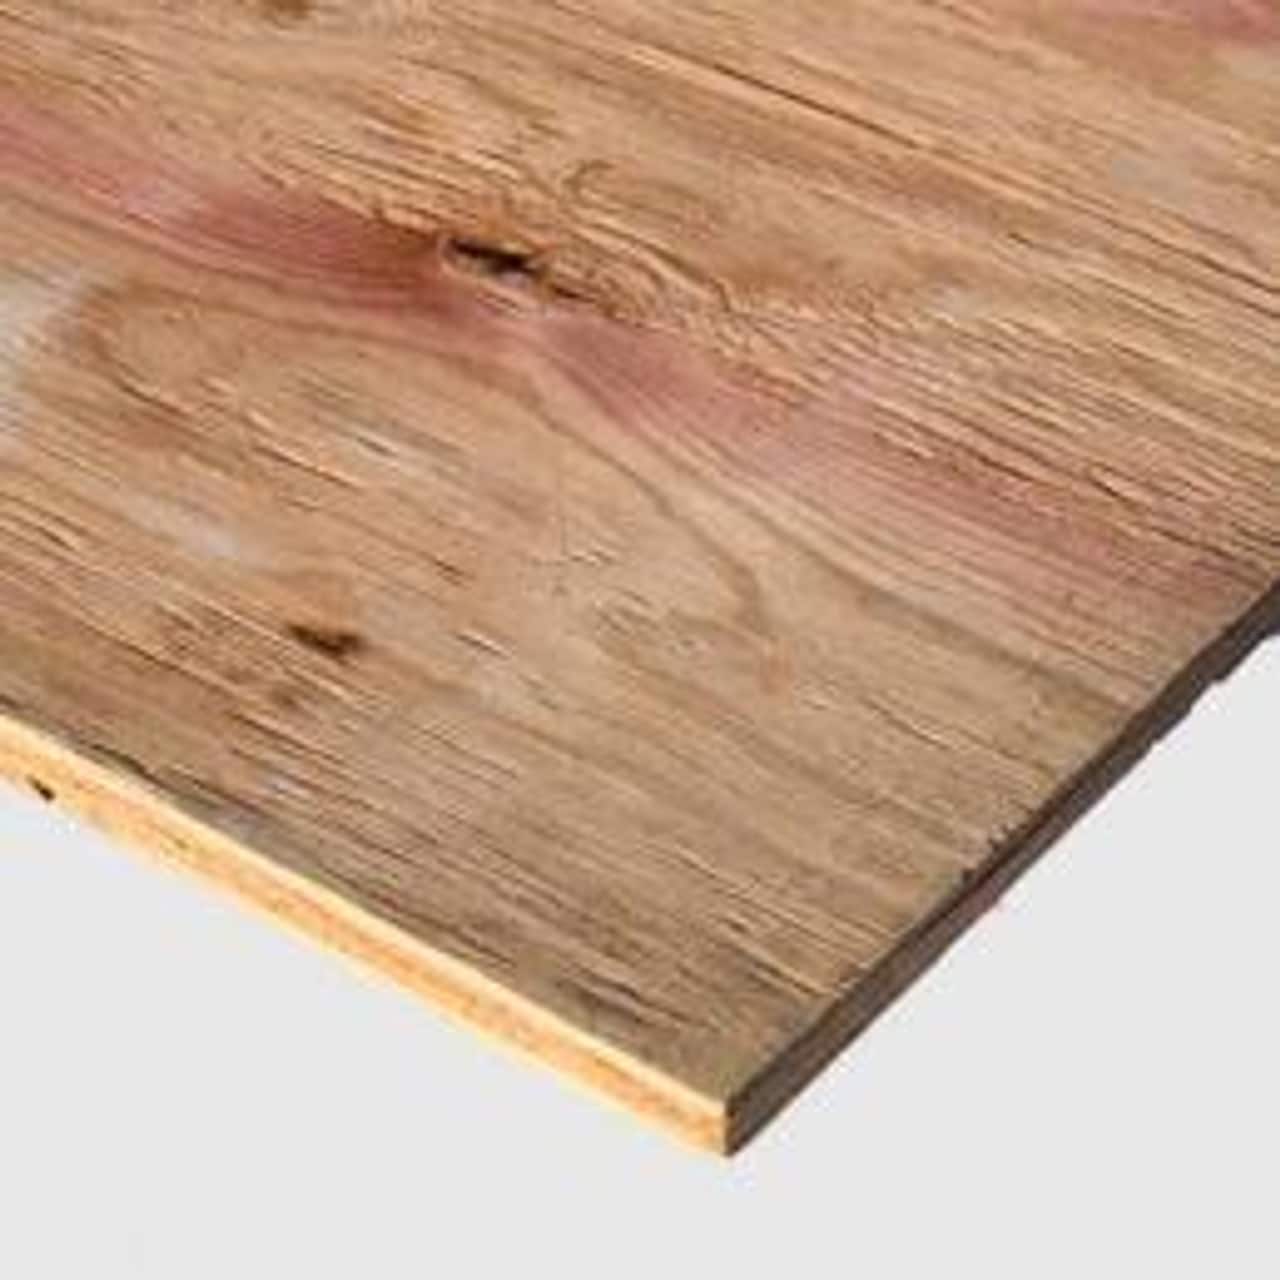 Luan Plywood  Capitol City Lumber